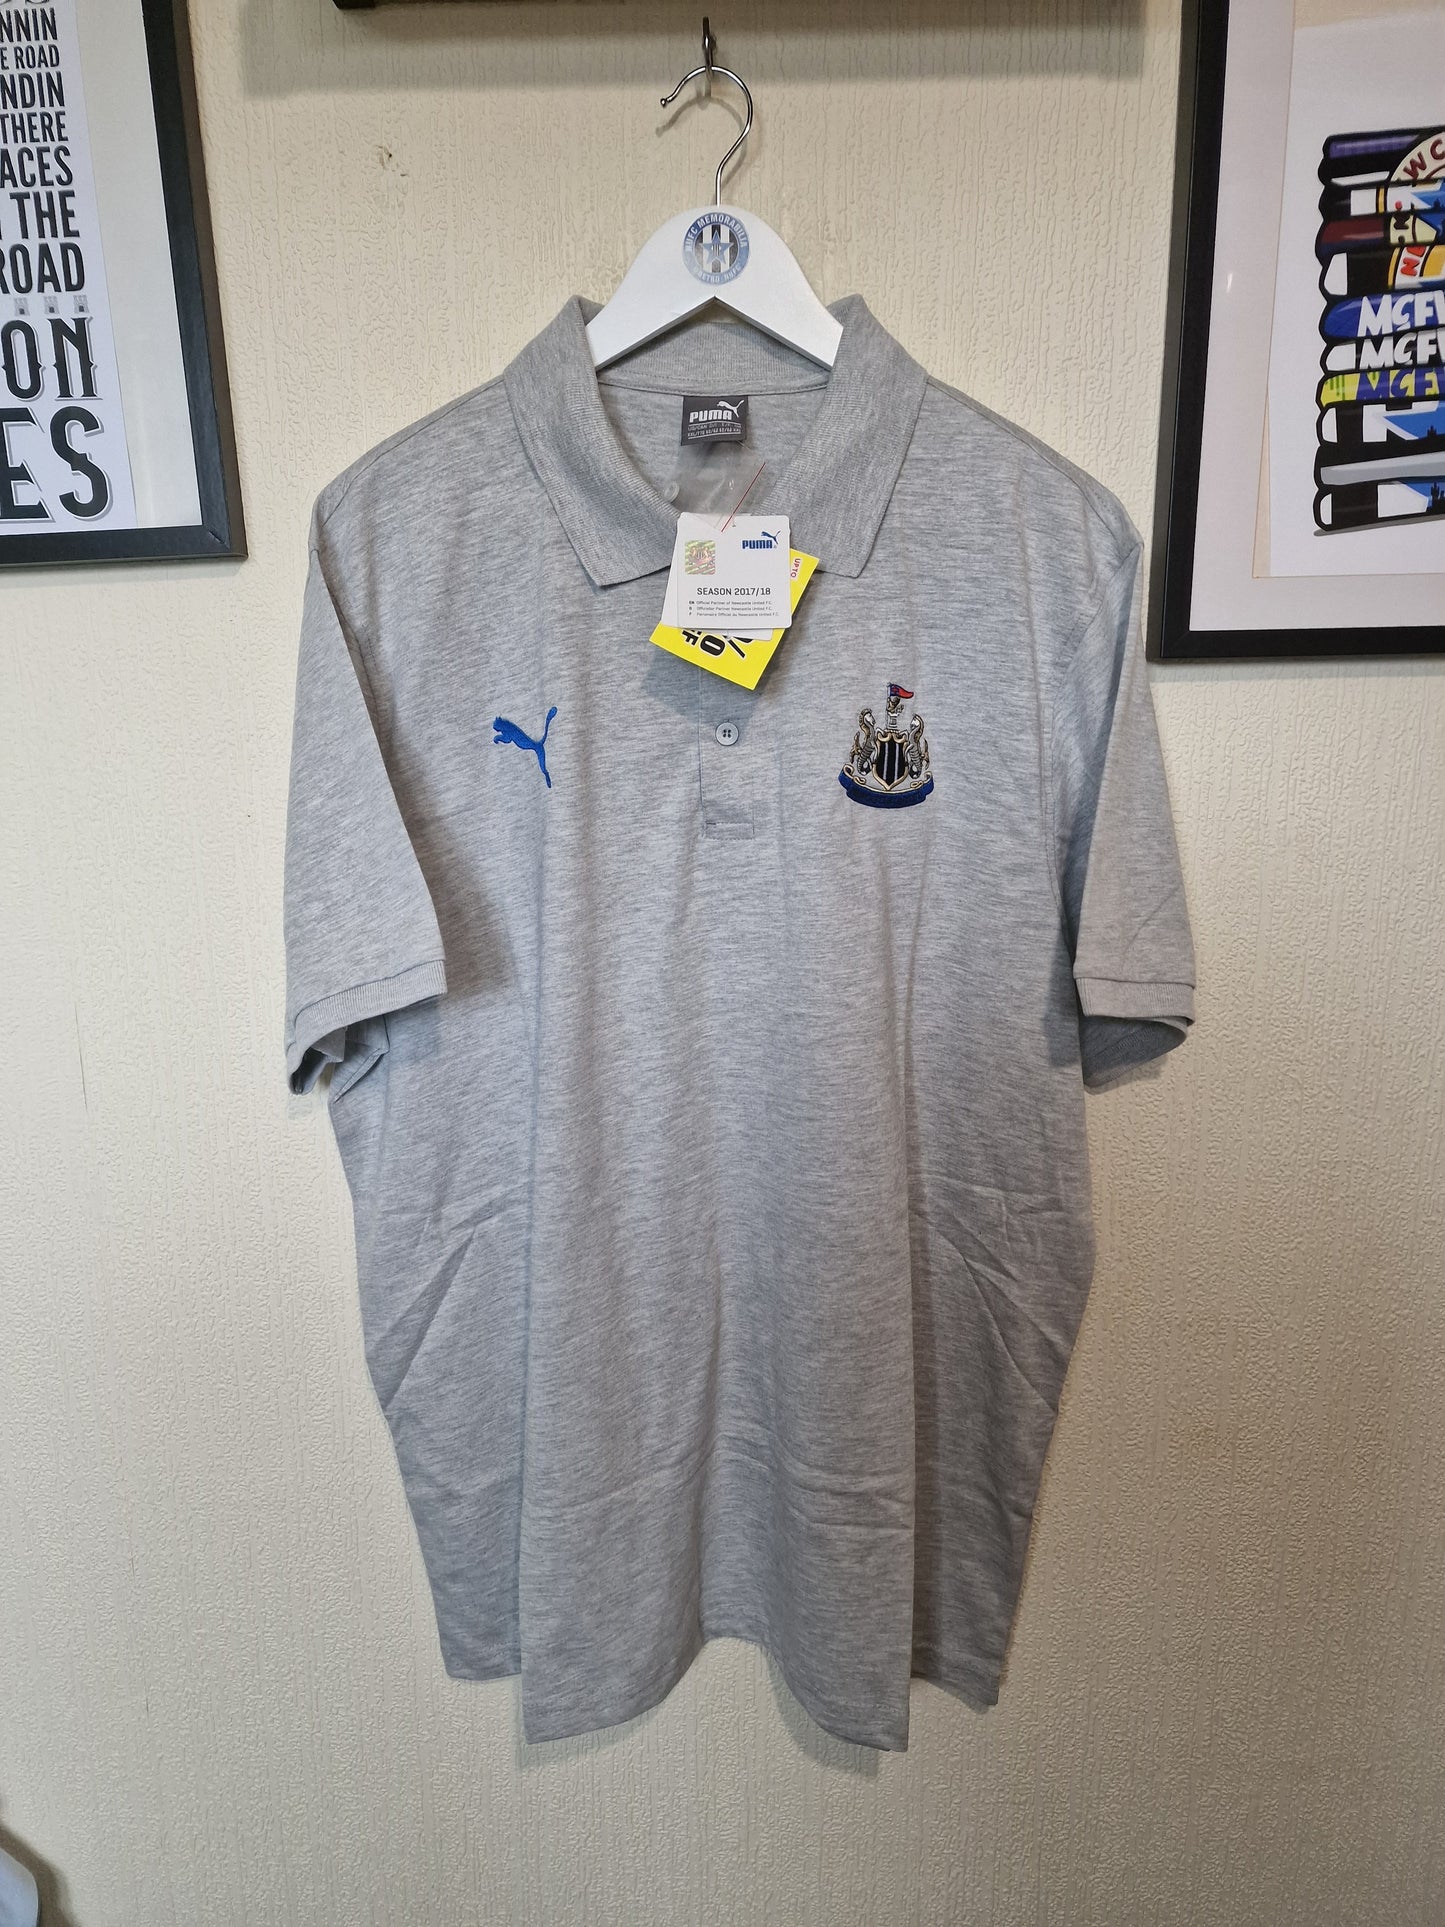 Newcastle United 2016/17 Polo shirt BNWT - XXL